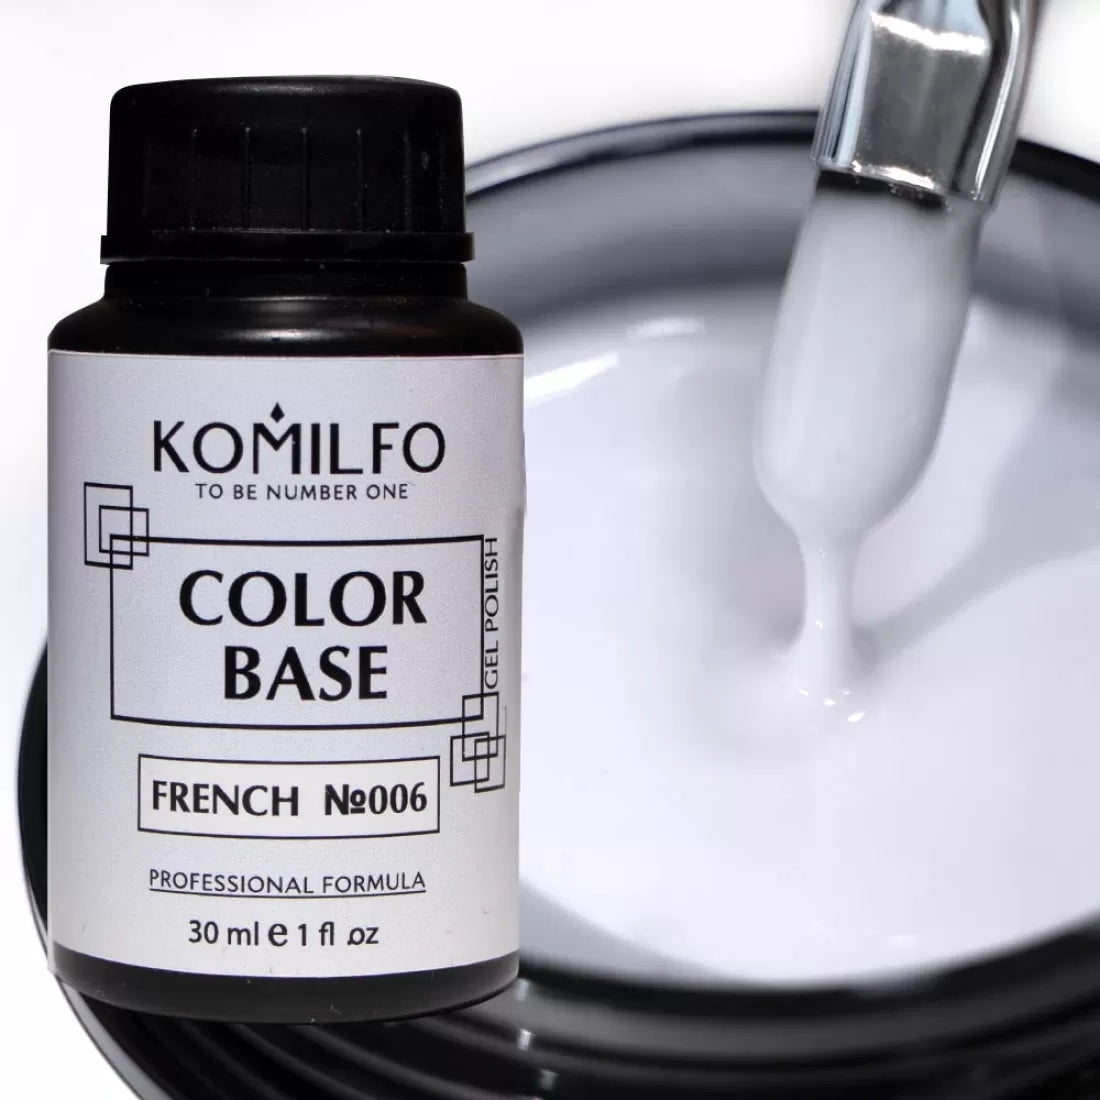 Komilfo Color Base French N006 30ml Barrel